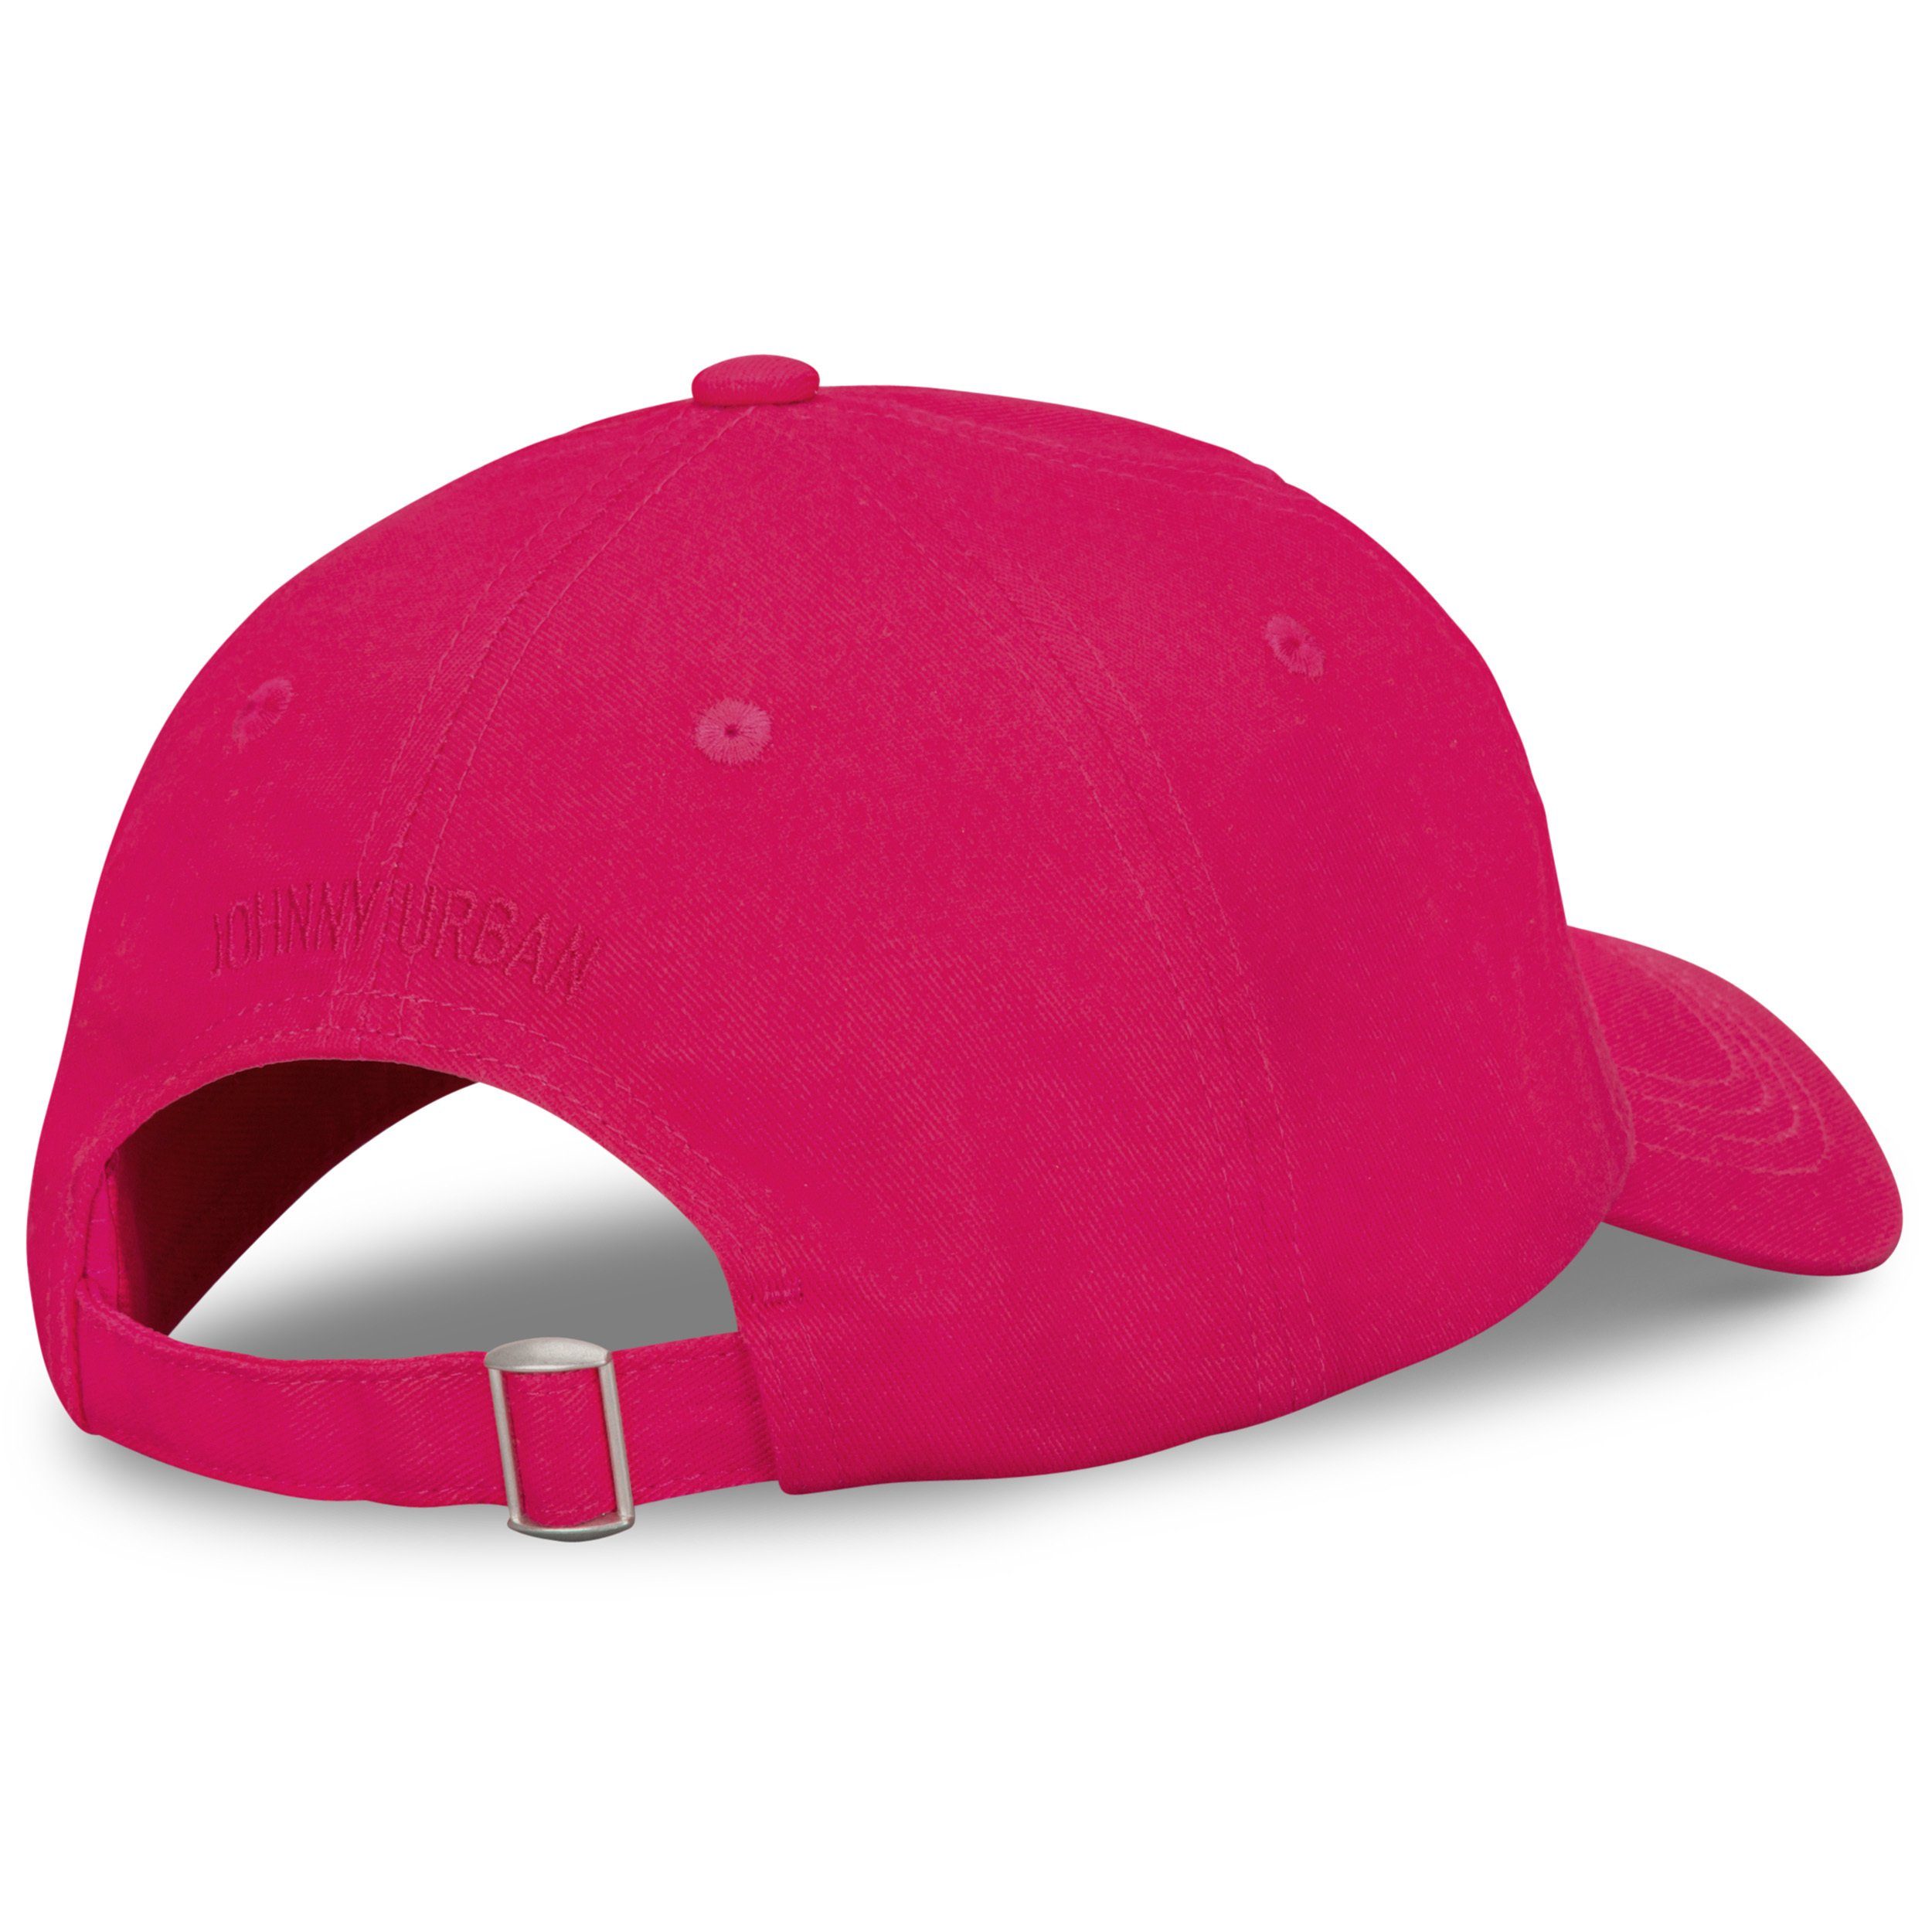 Johnny Urban Basecap Herren Unisex Pink Cap Damen Größenverstellbar, Jen Cap Snapback